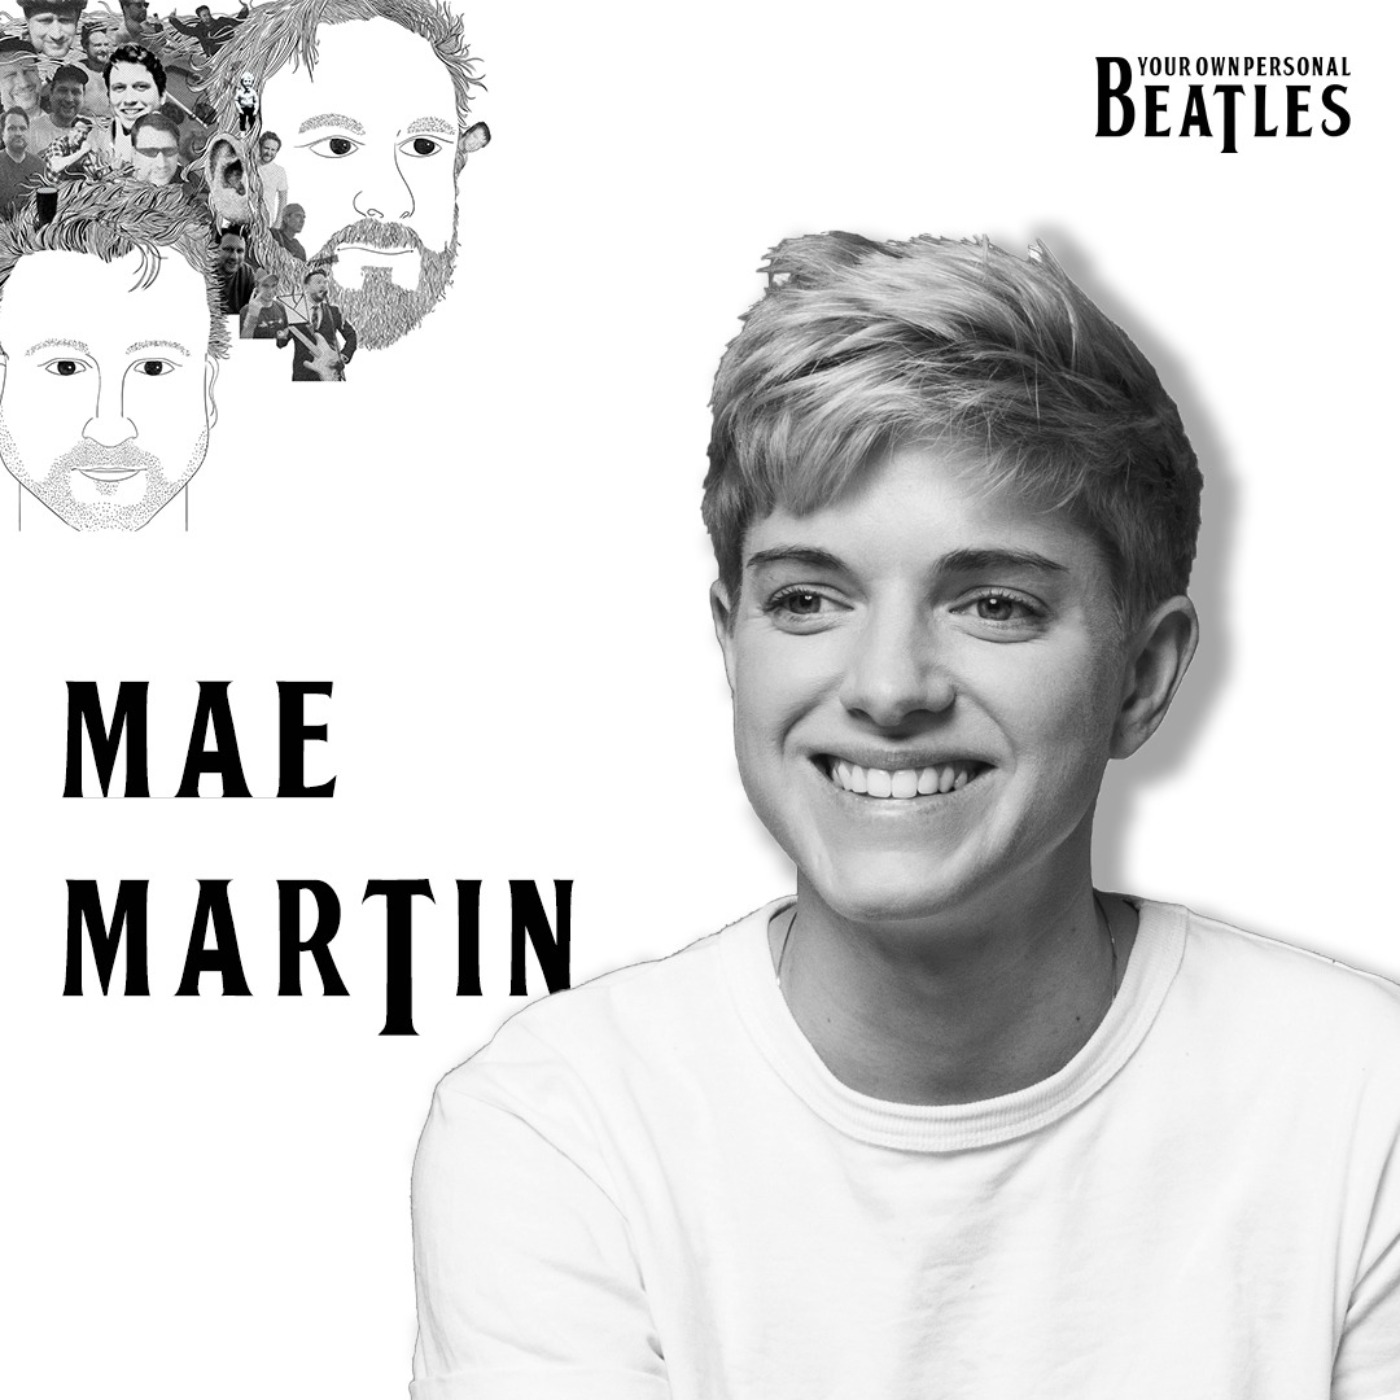 Mae Martin’s Personal Beatles